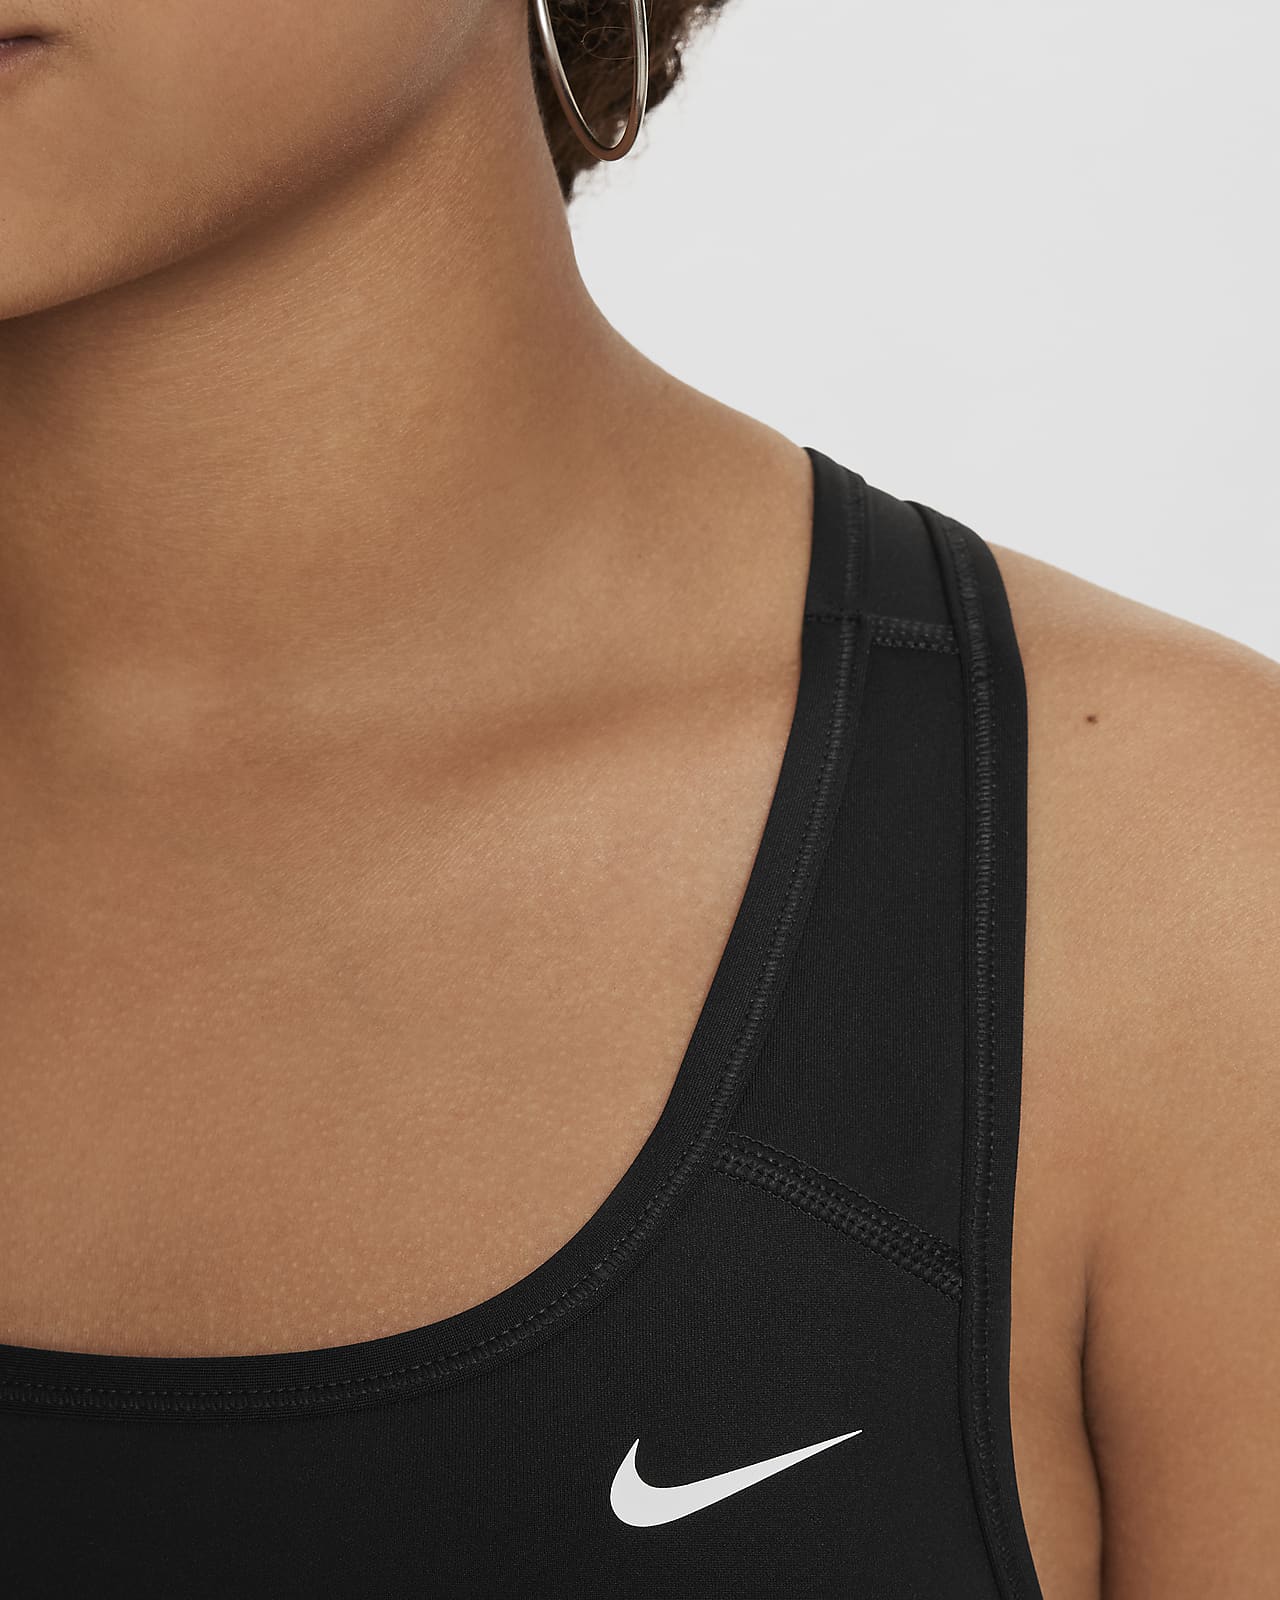 Nike Pro Sports Bra - Girls - Black/White - Youth X-Large